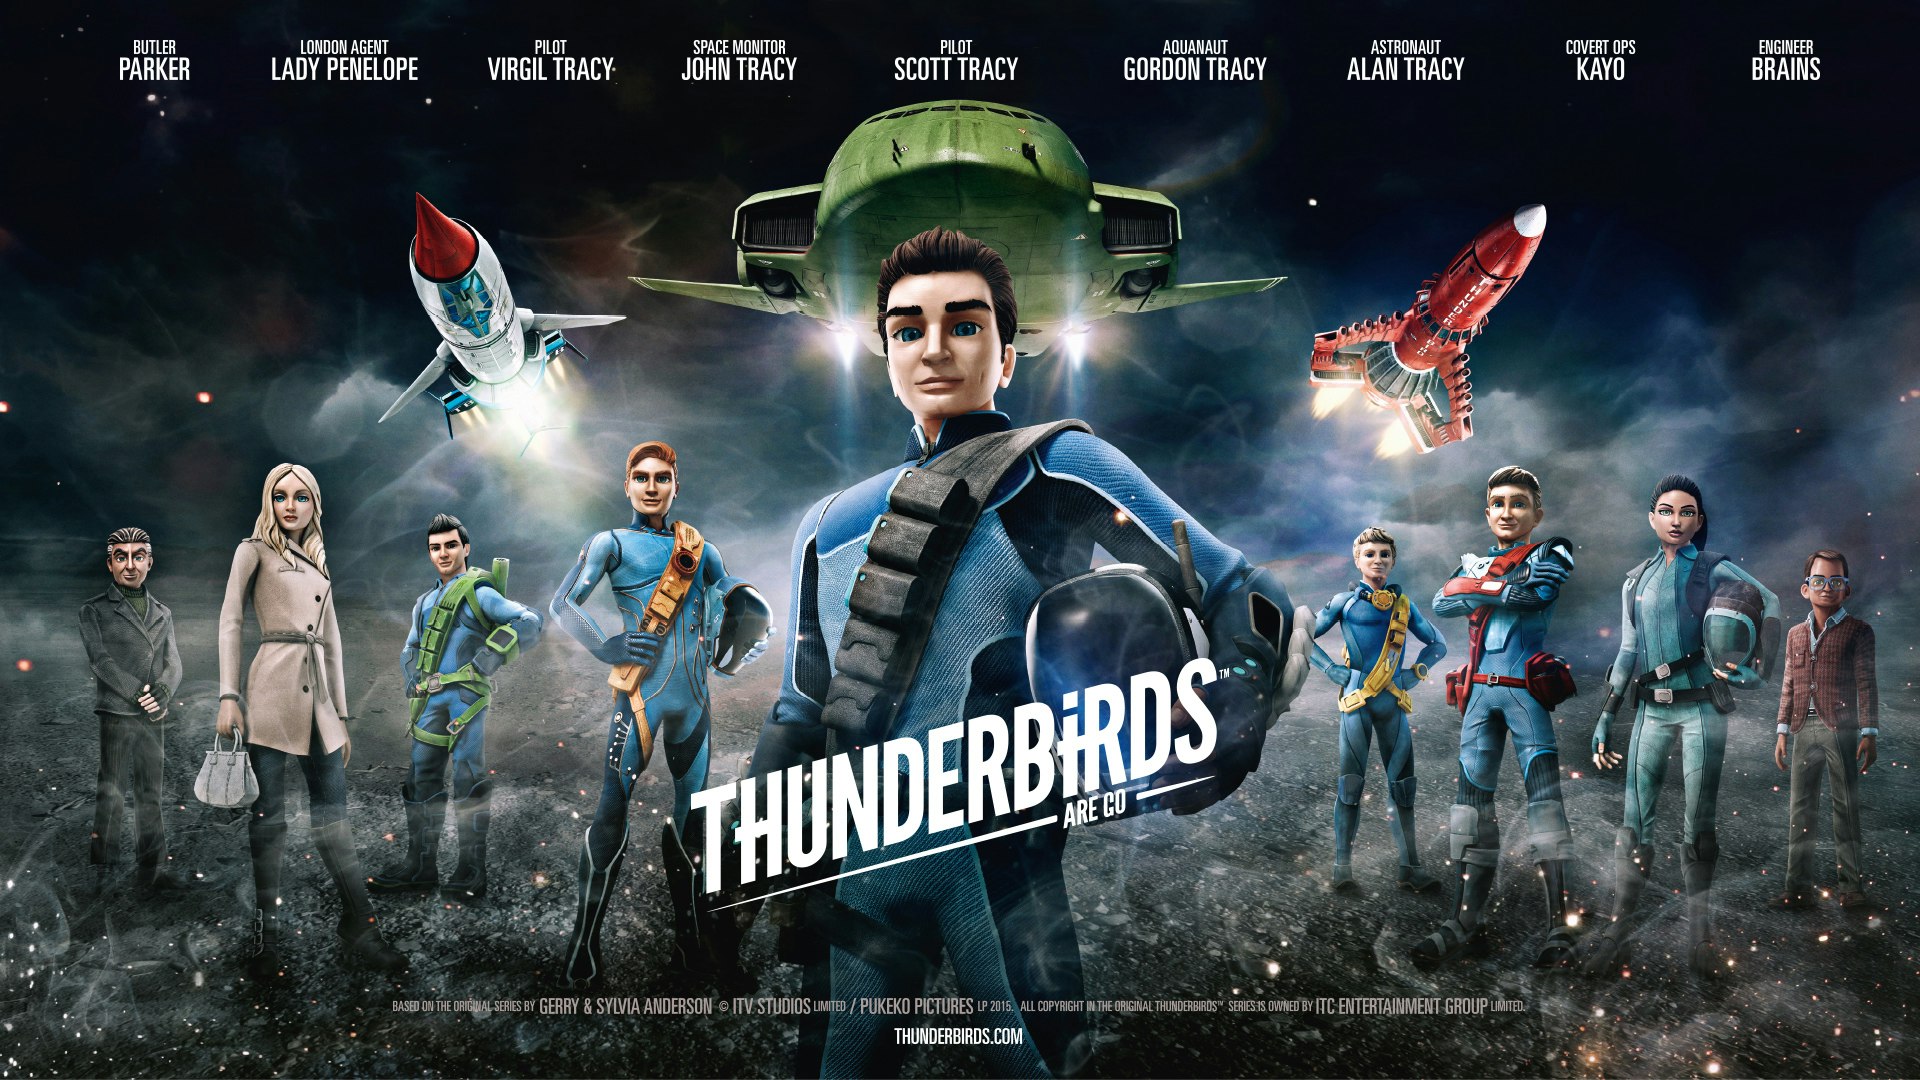 Jason Ford - Thunderbirds Season 1